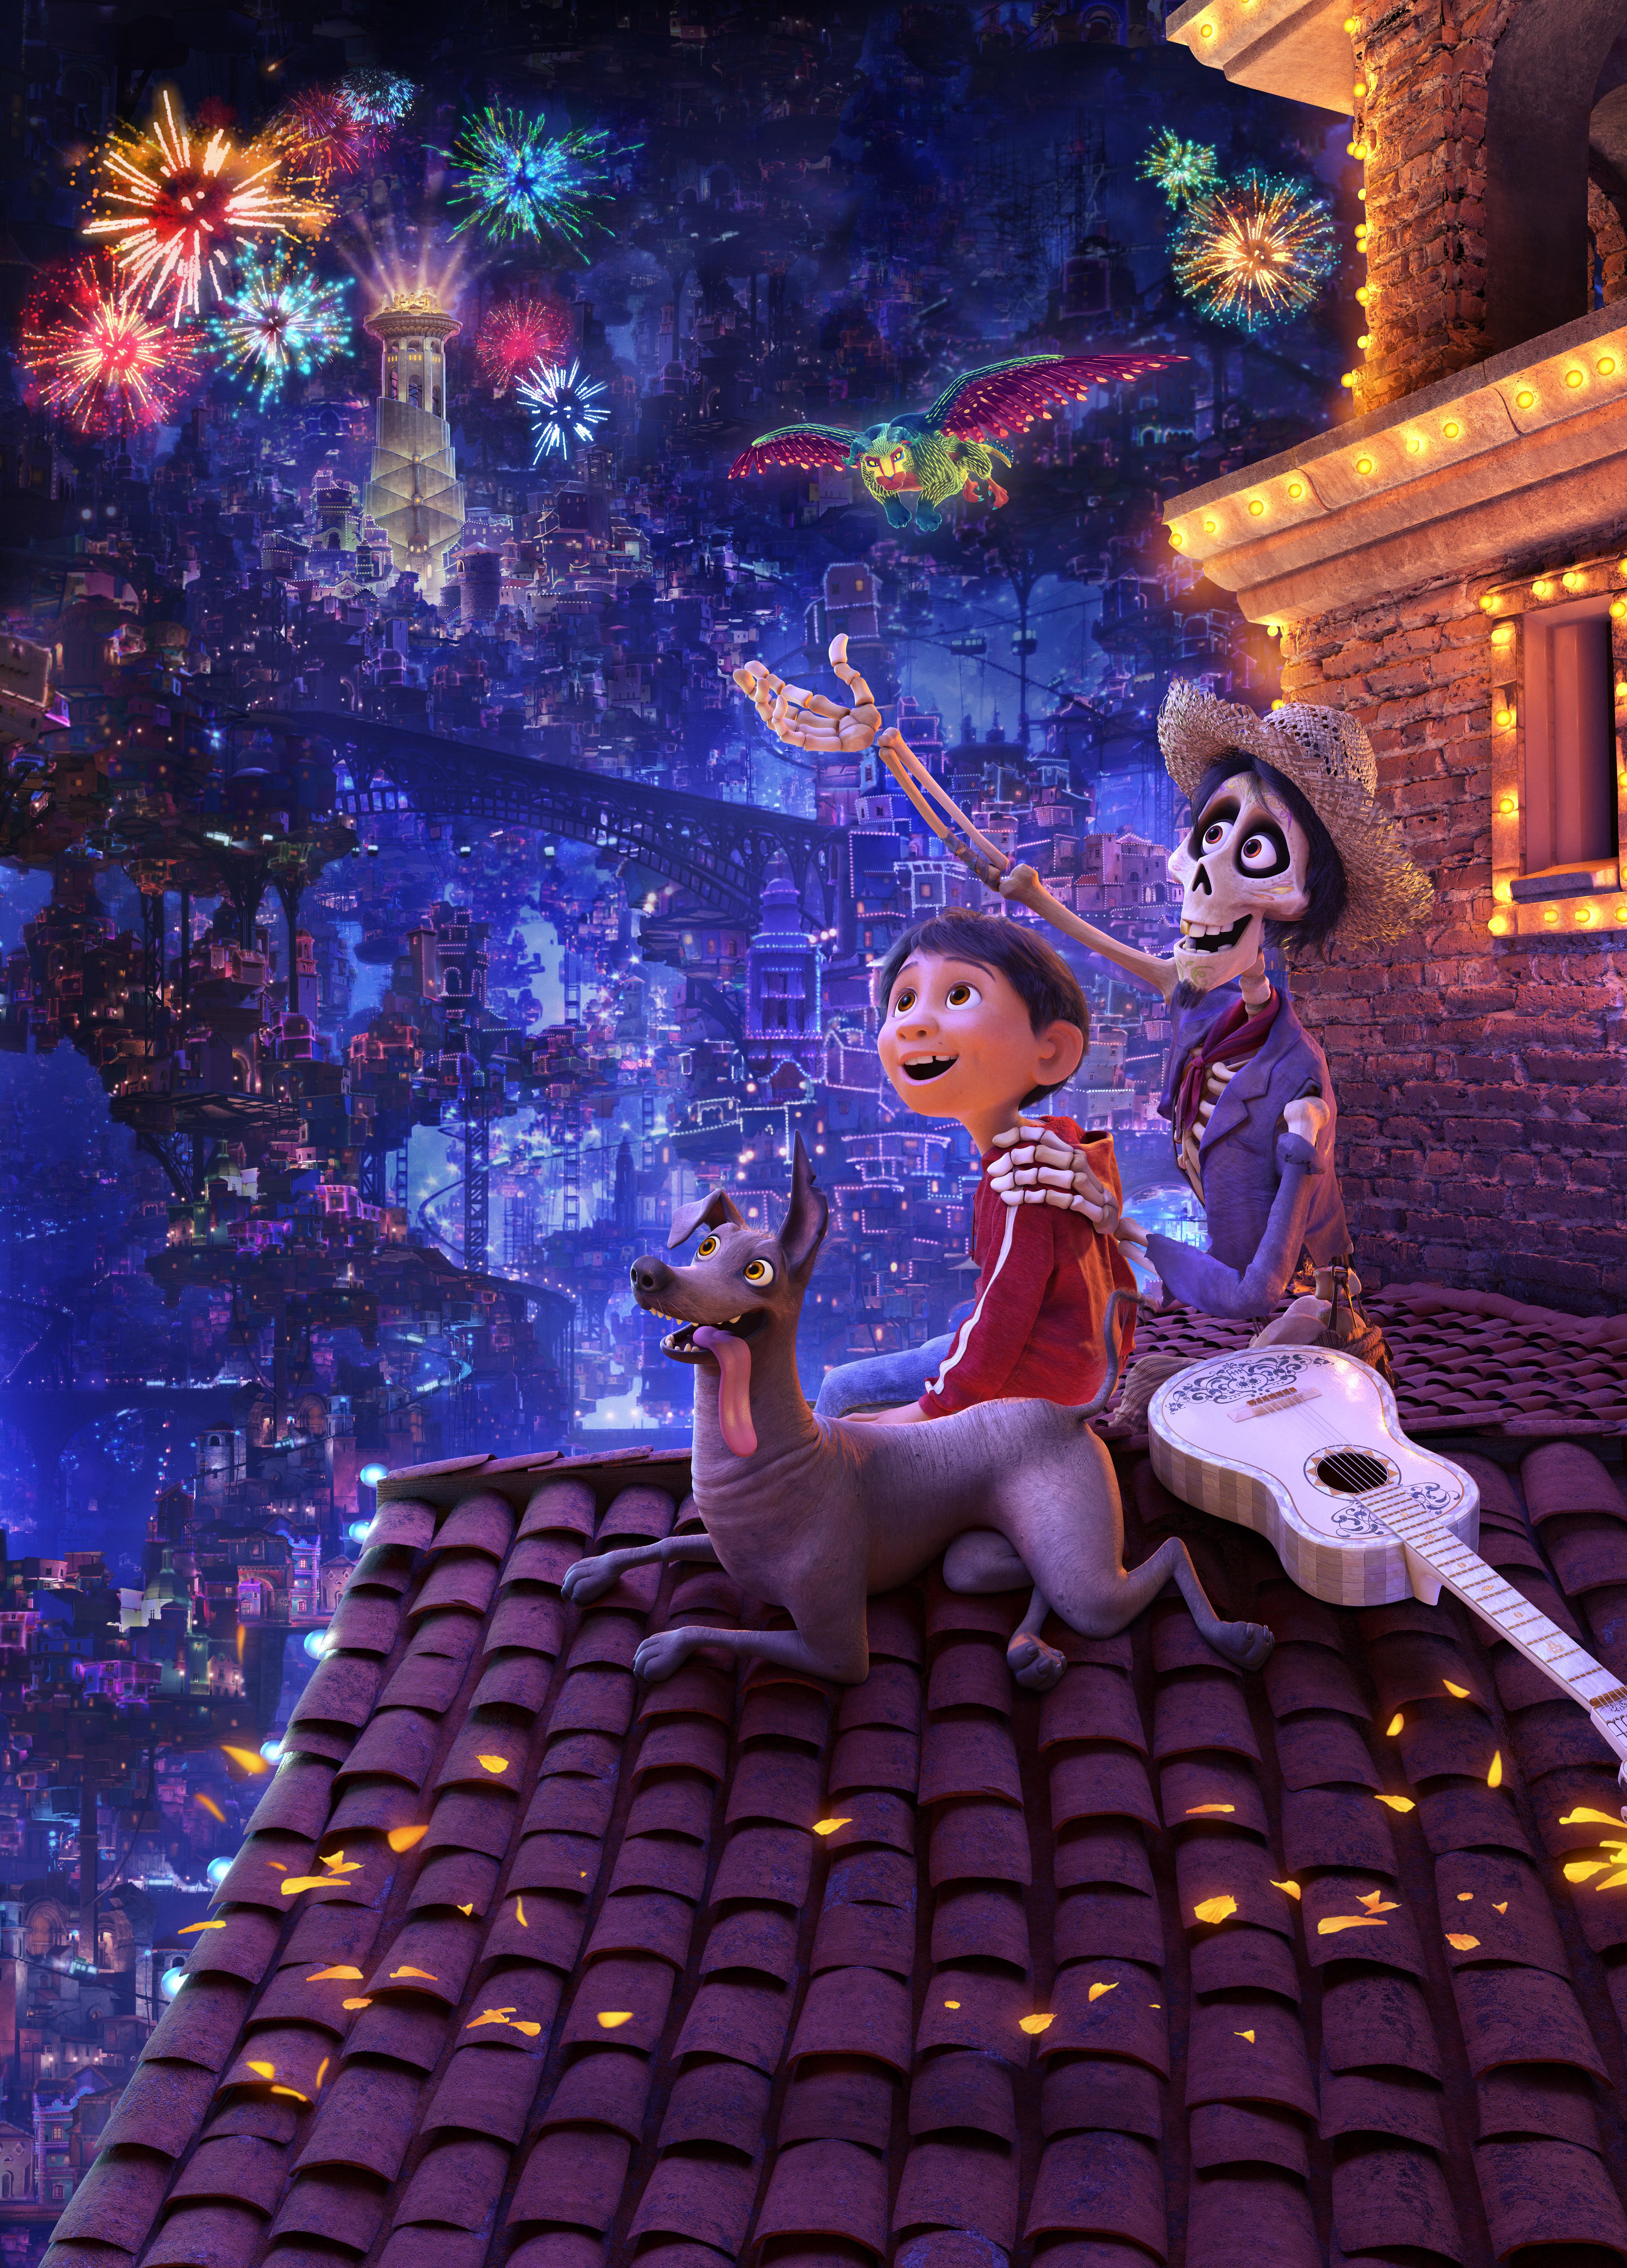 Coco Pixar Wallpapers Top Free Coco Pixar Backgrounds Wallpaperaccess ...